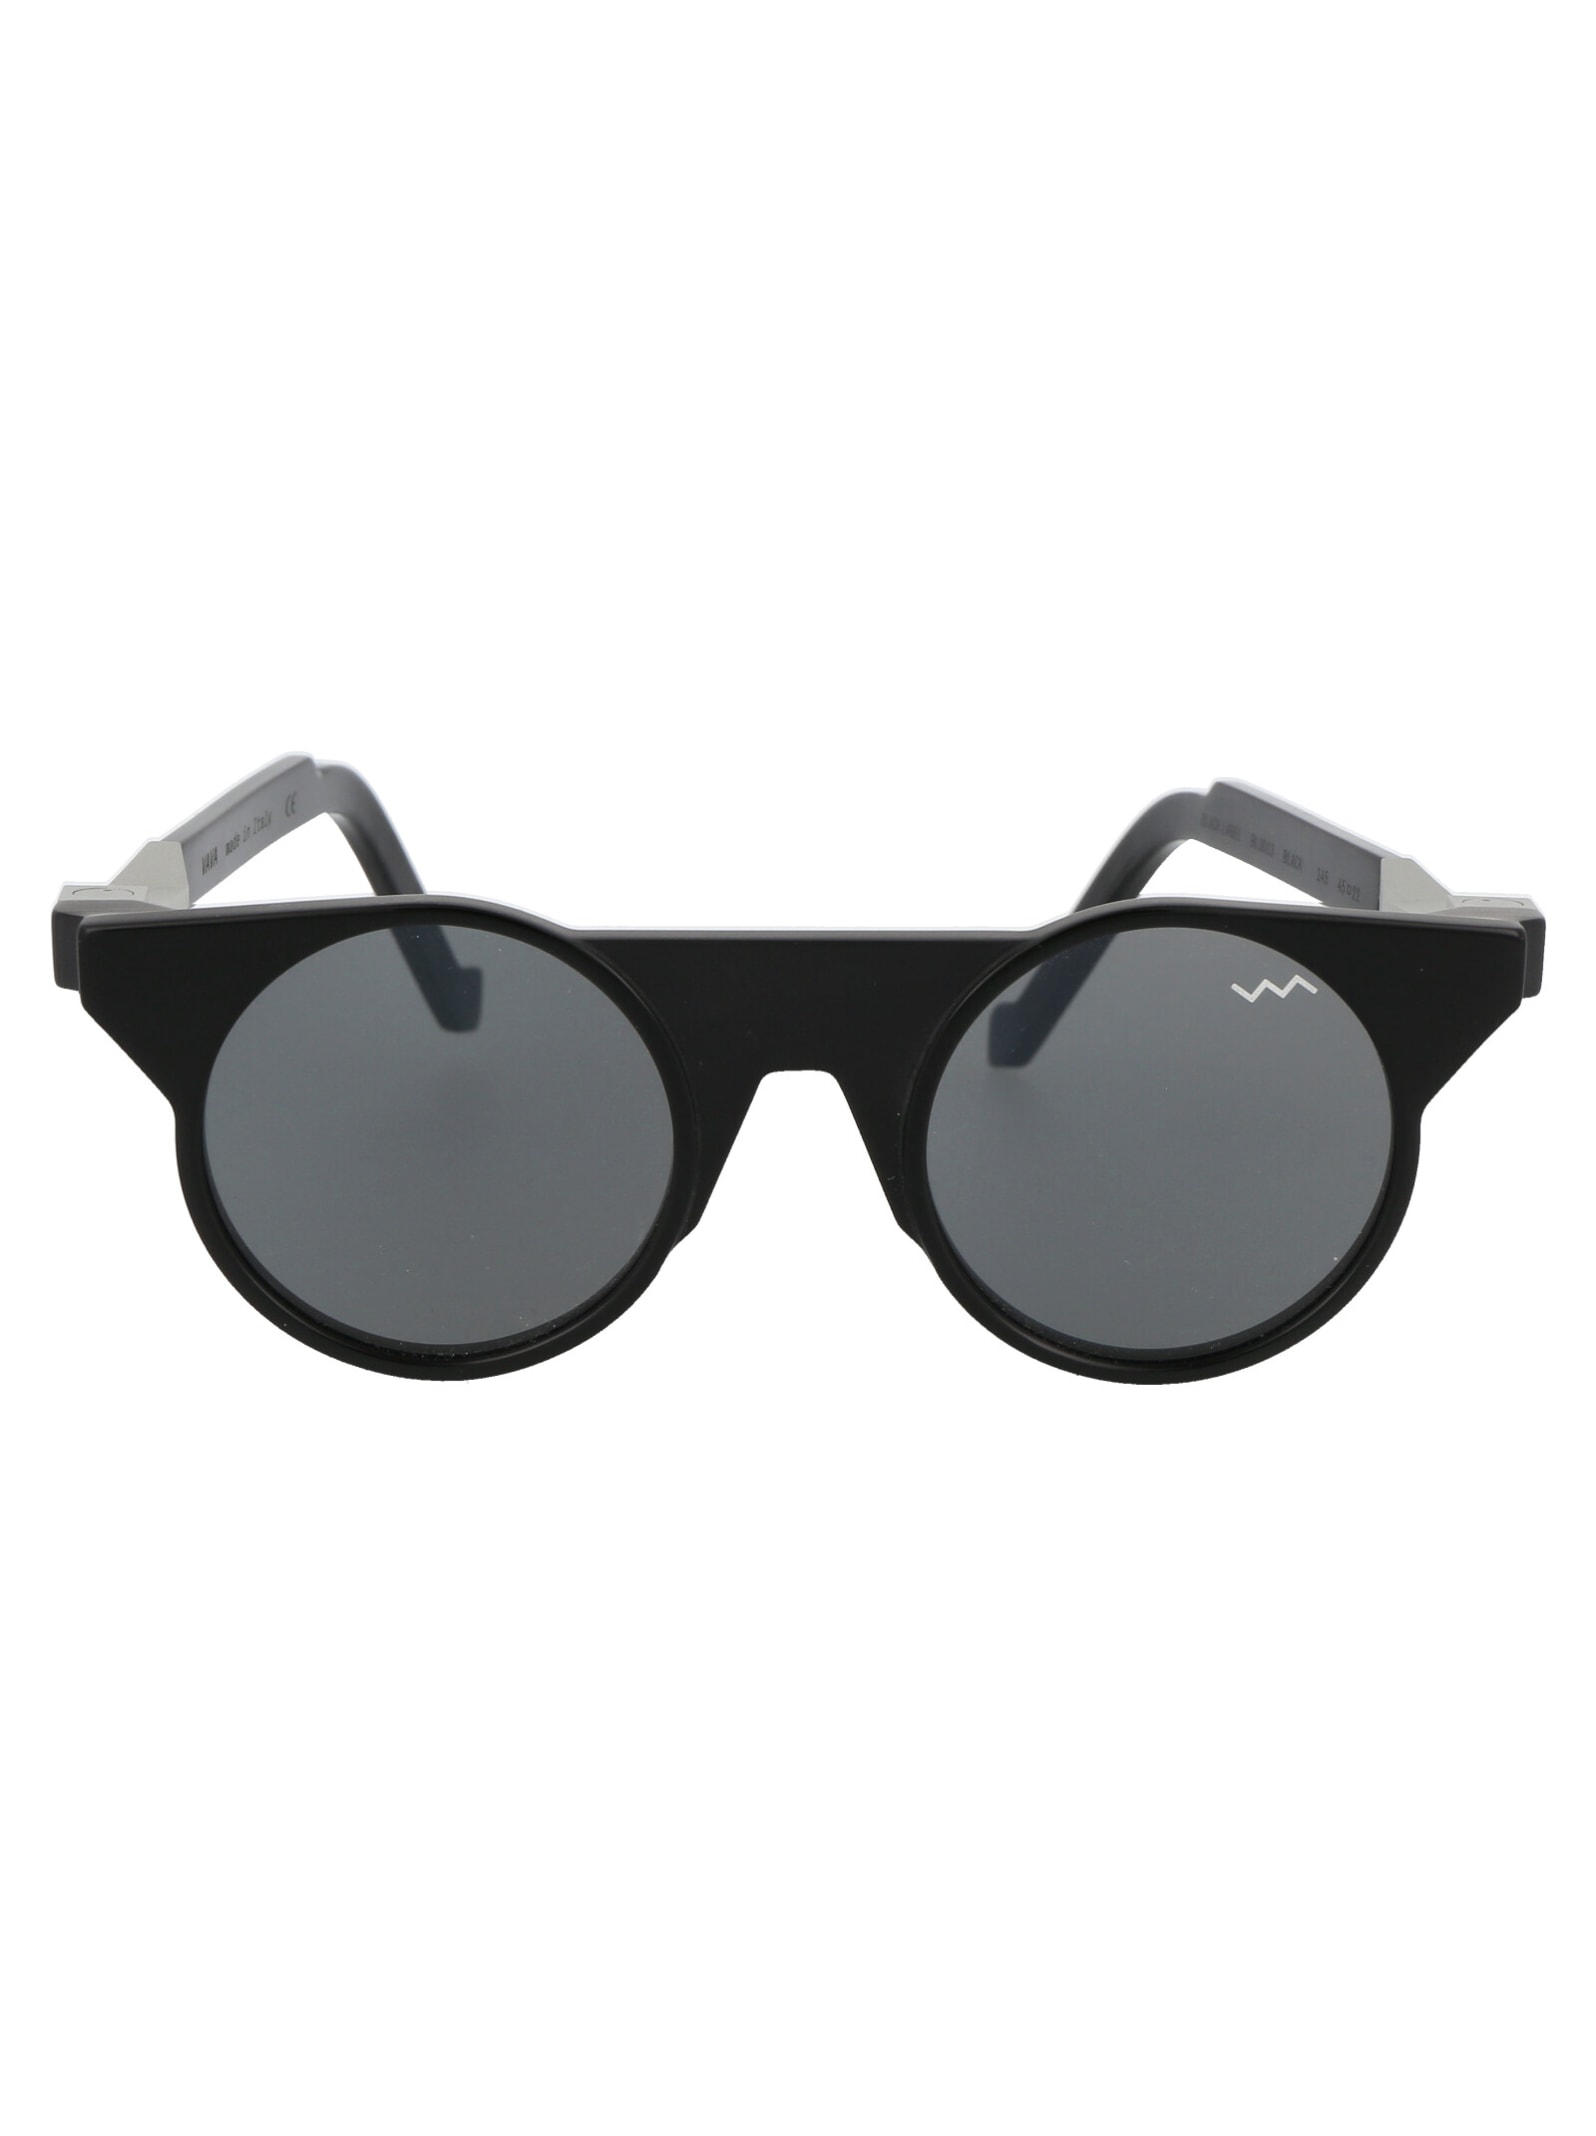 Bl0013 Sunglasses